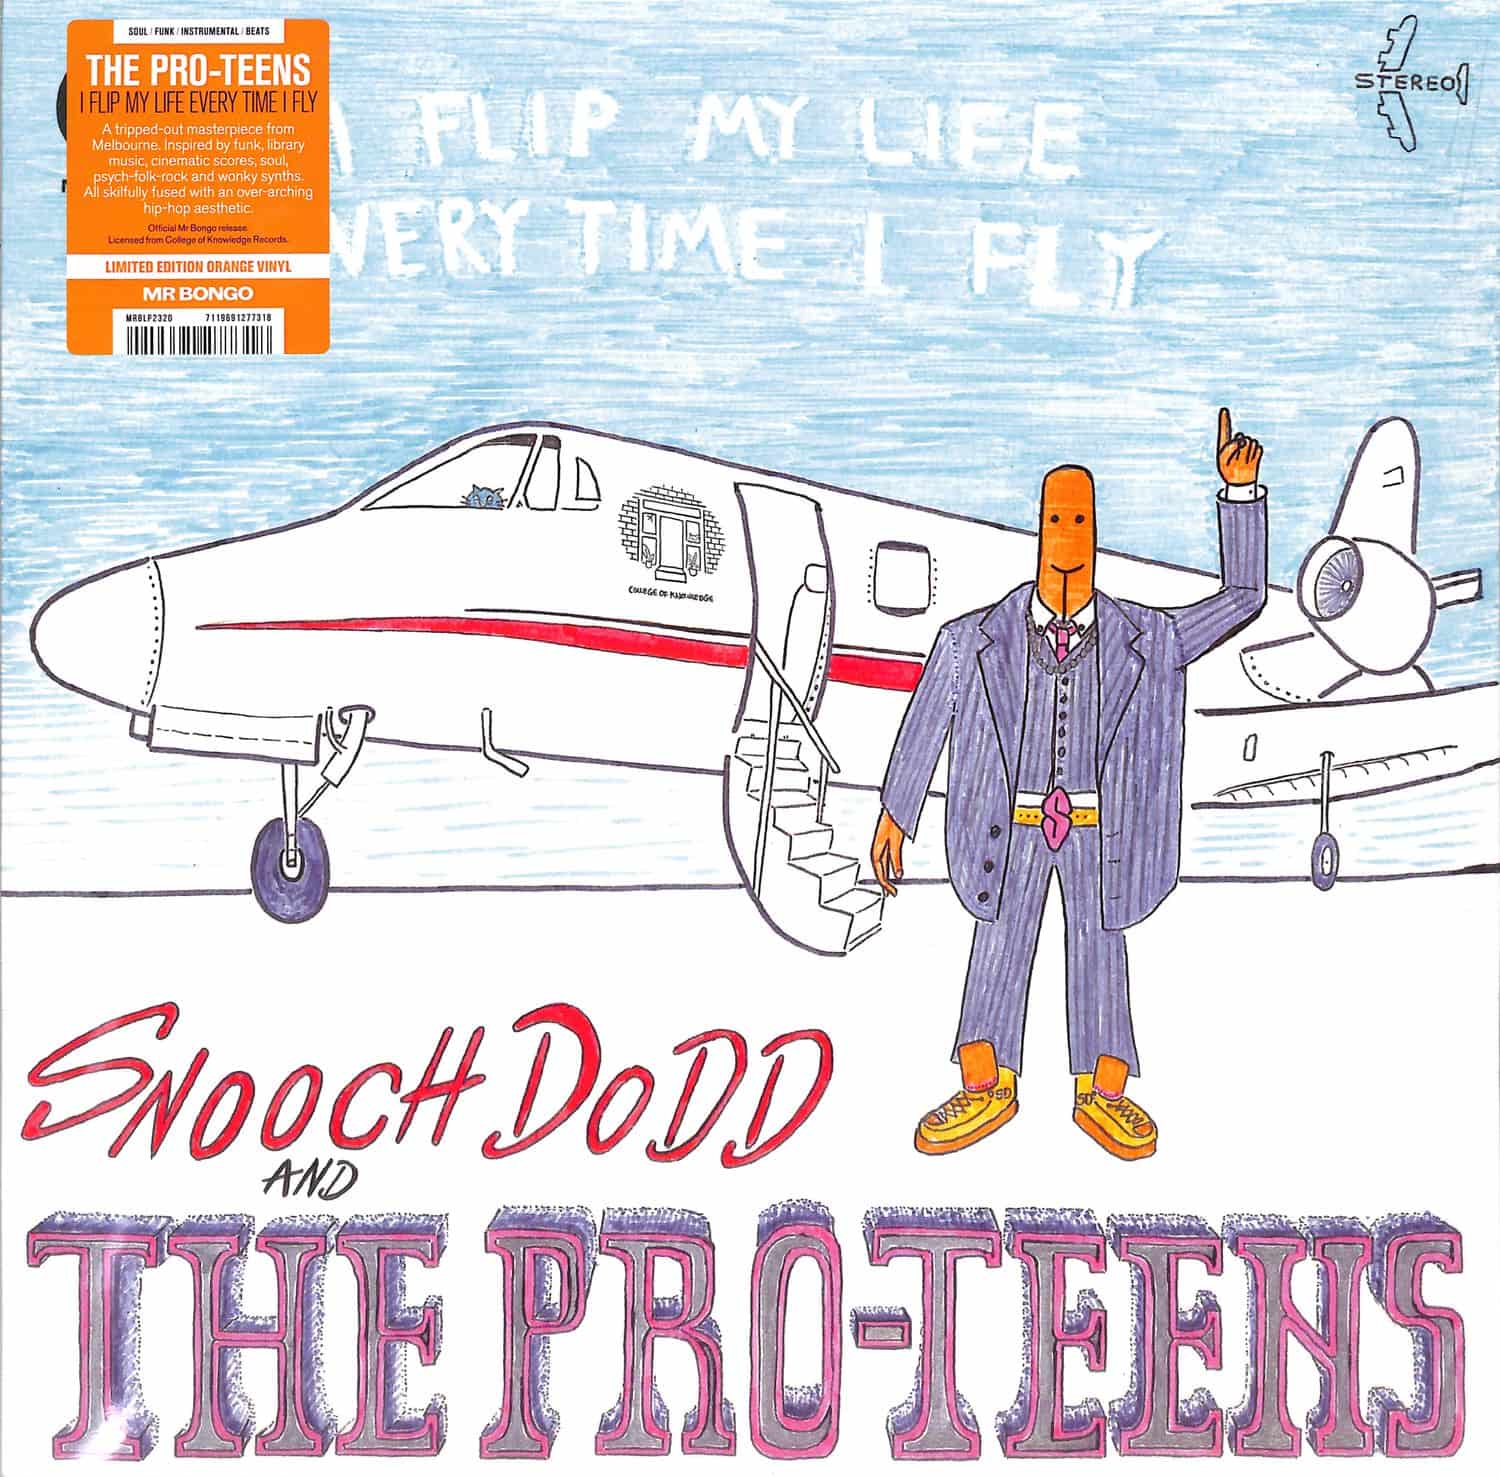 Snooch Dodd & The Pro-Teens - I FLIP MY LIFE EVERY TIME I FLY 